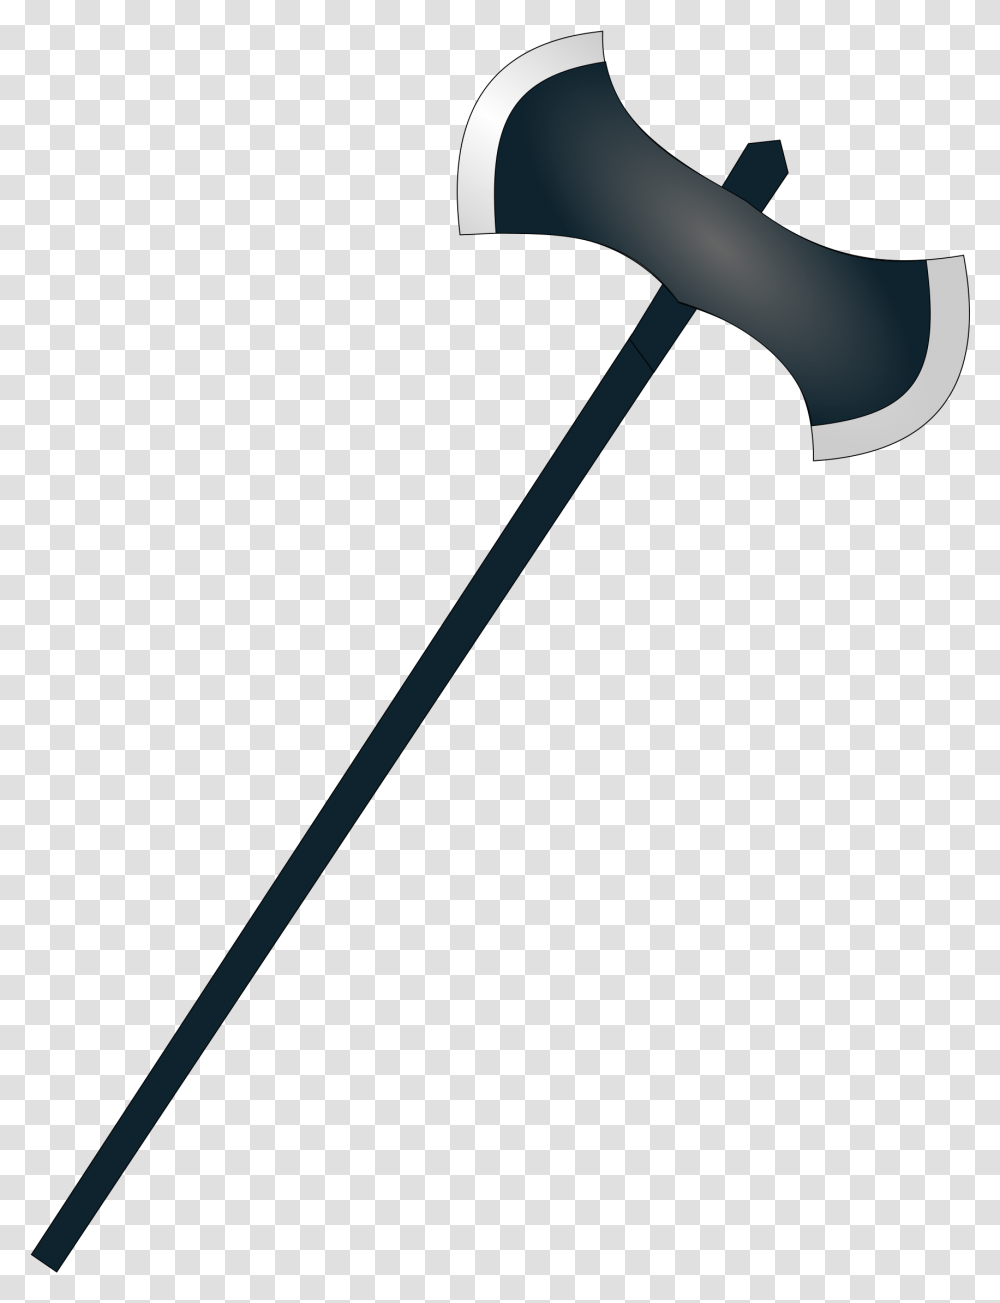 Axe Icon Clip Arts Axe Designs, Tool, Sword, Blade, Weapon Transparent Png